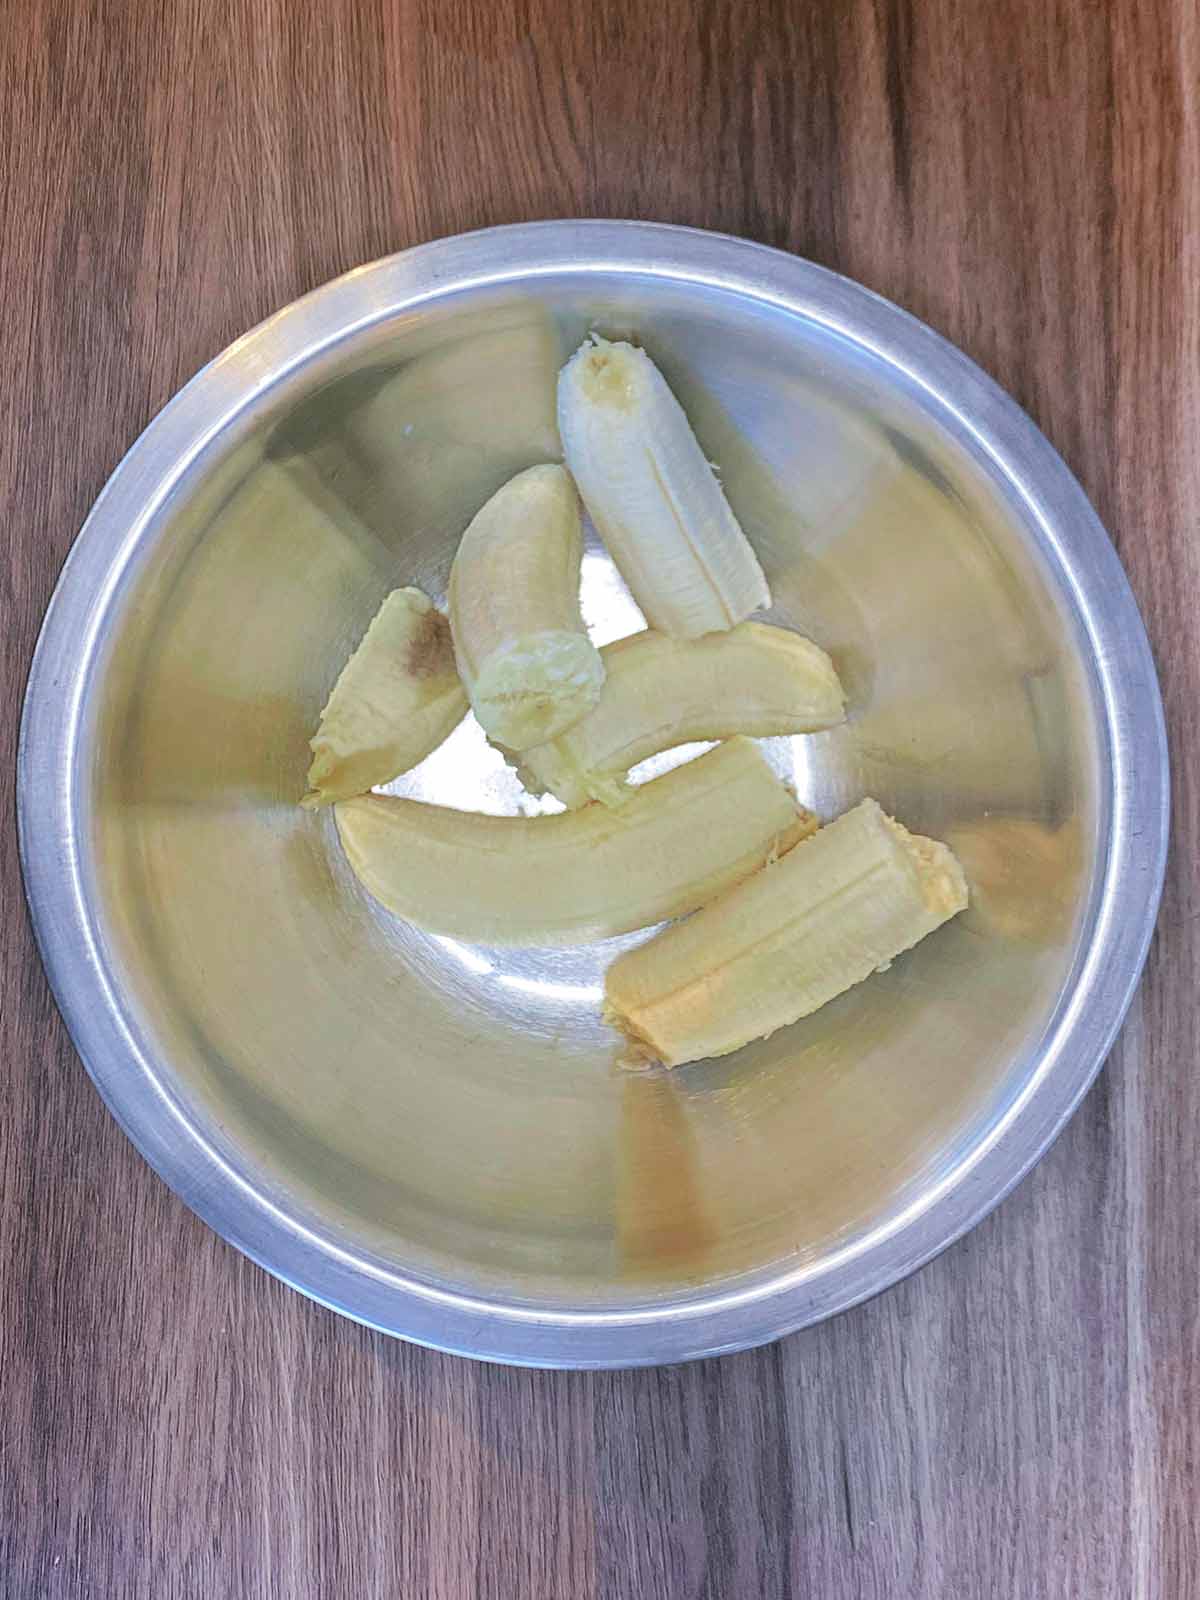 Broken bananas in a mixing bowl.